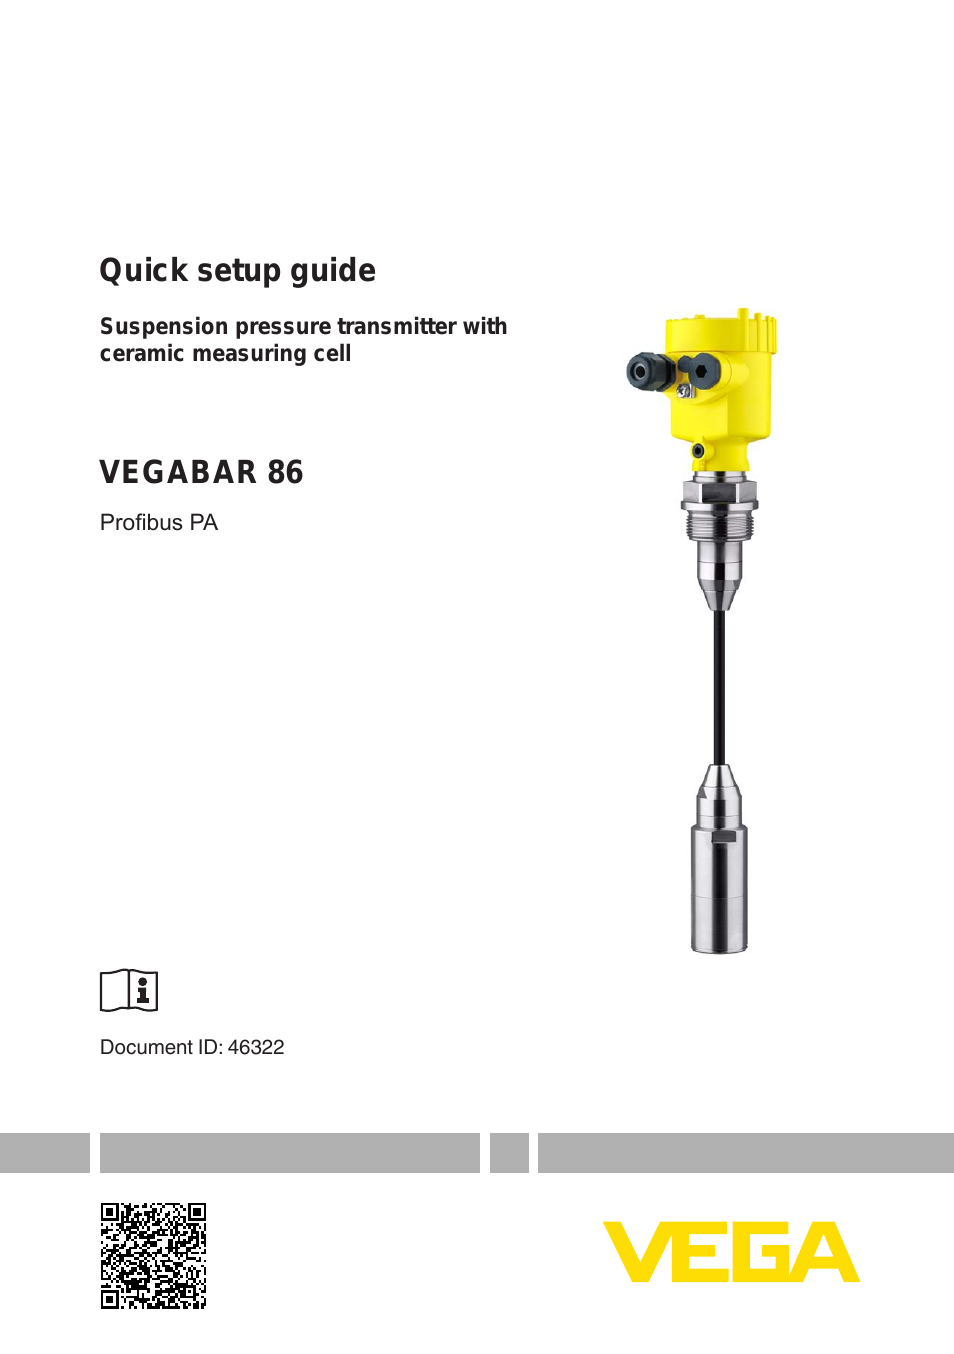 VEGABAR 86 Profibus PA - Quick setup guide